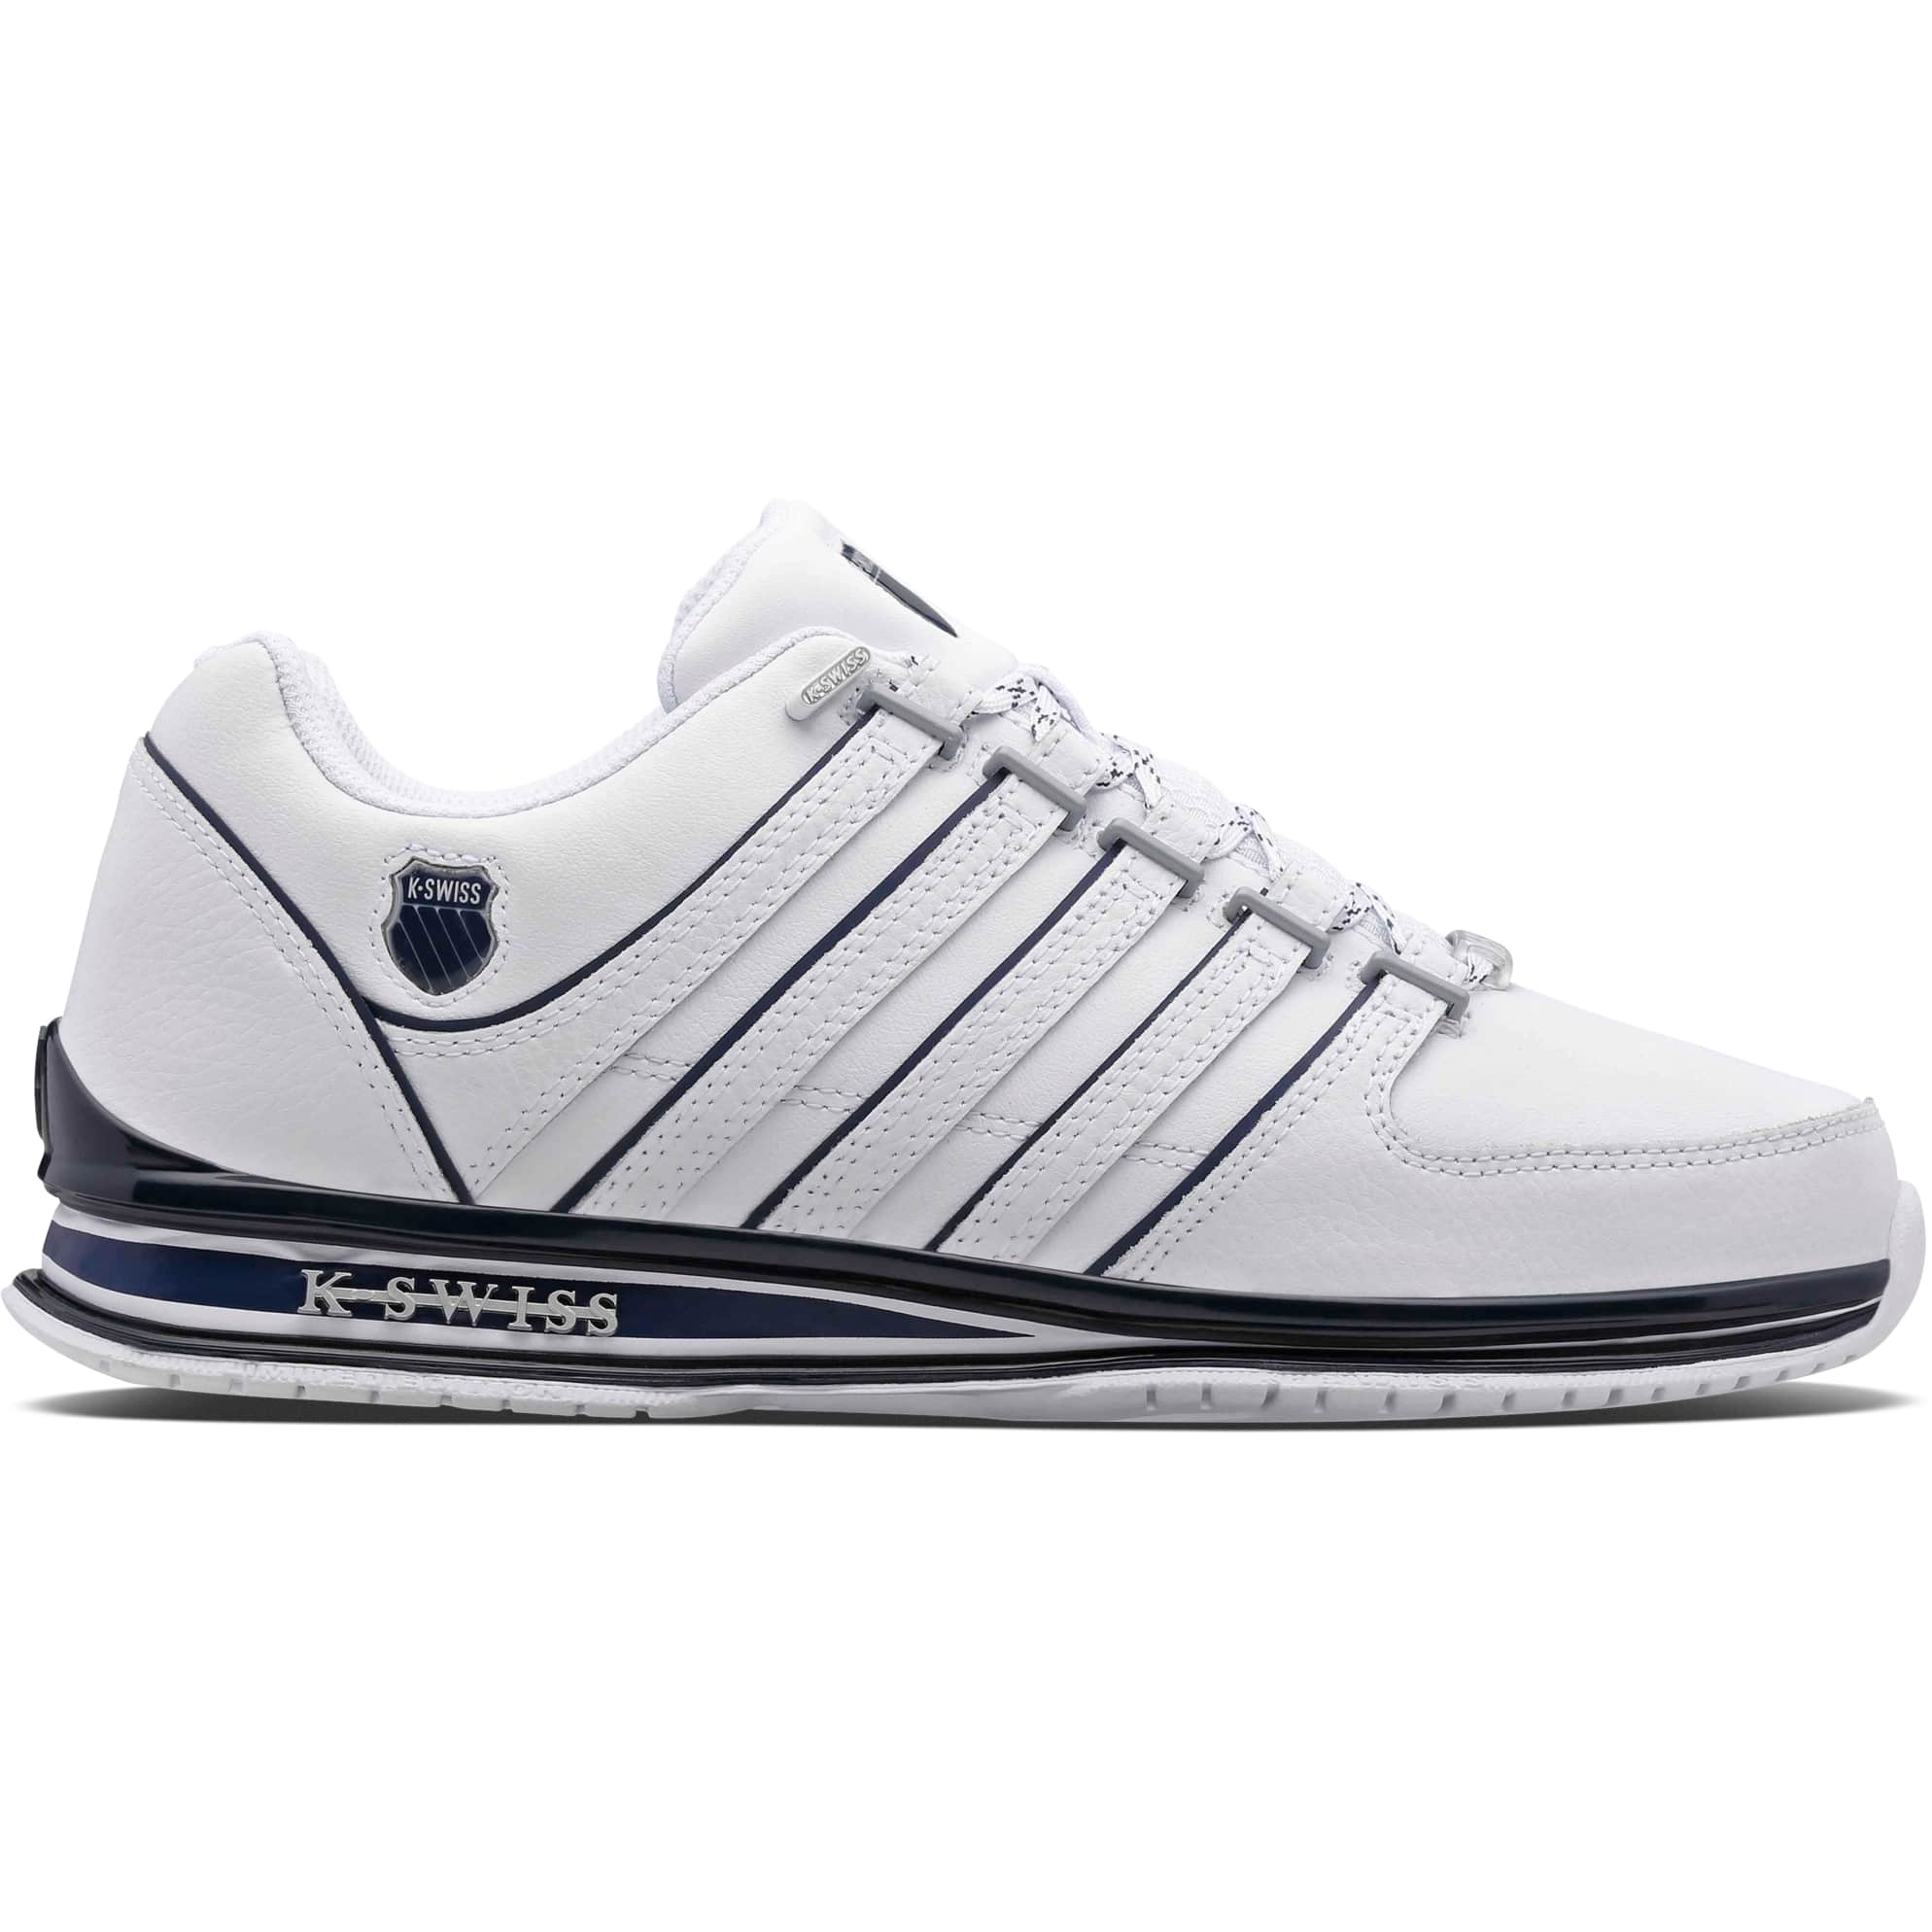 K-Swiss Mens Rinzler Trainers Shoes - UK 9.5 White 2951